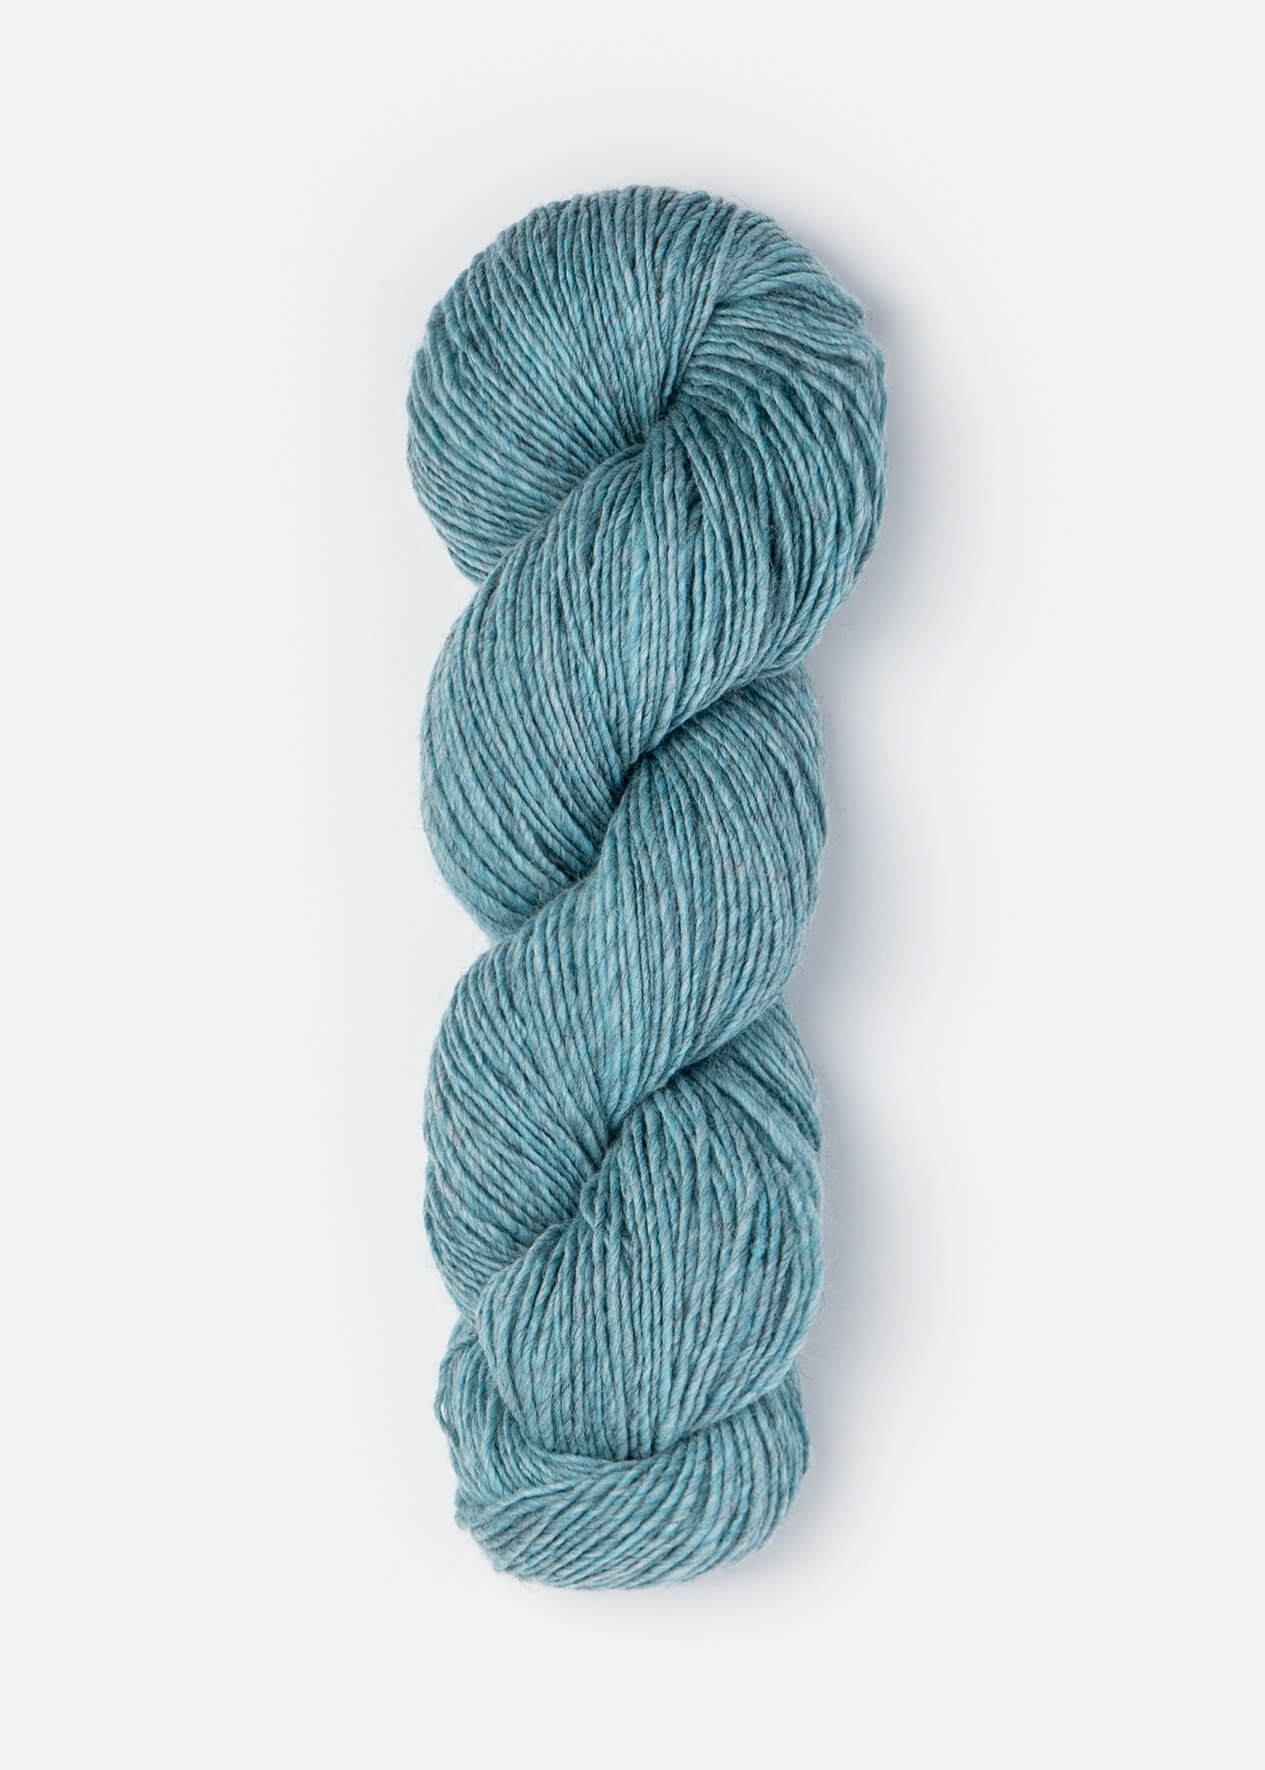 Persimmon Wrap Kit by Blue Sky Fibers – The Yarn Studio